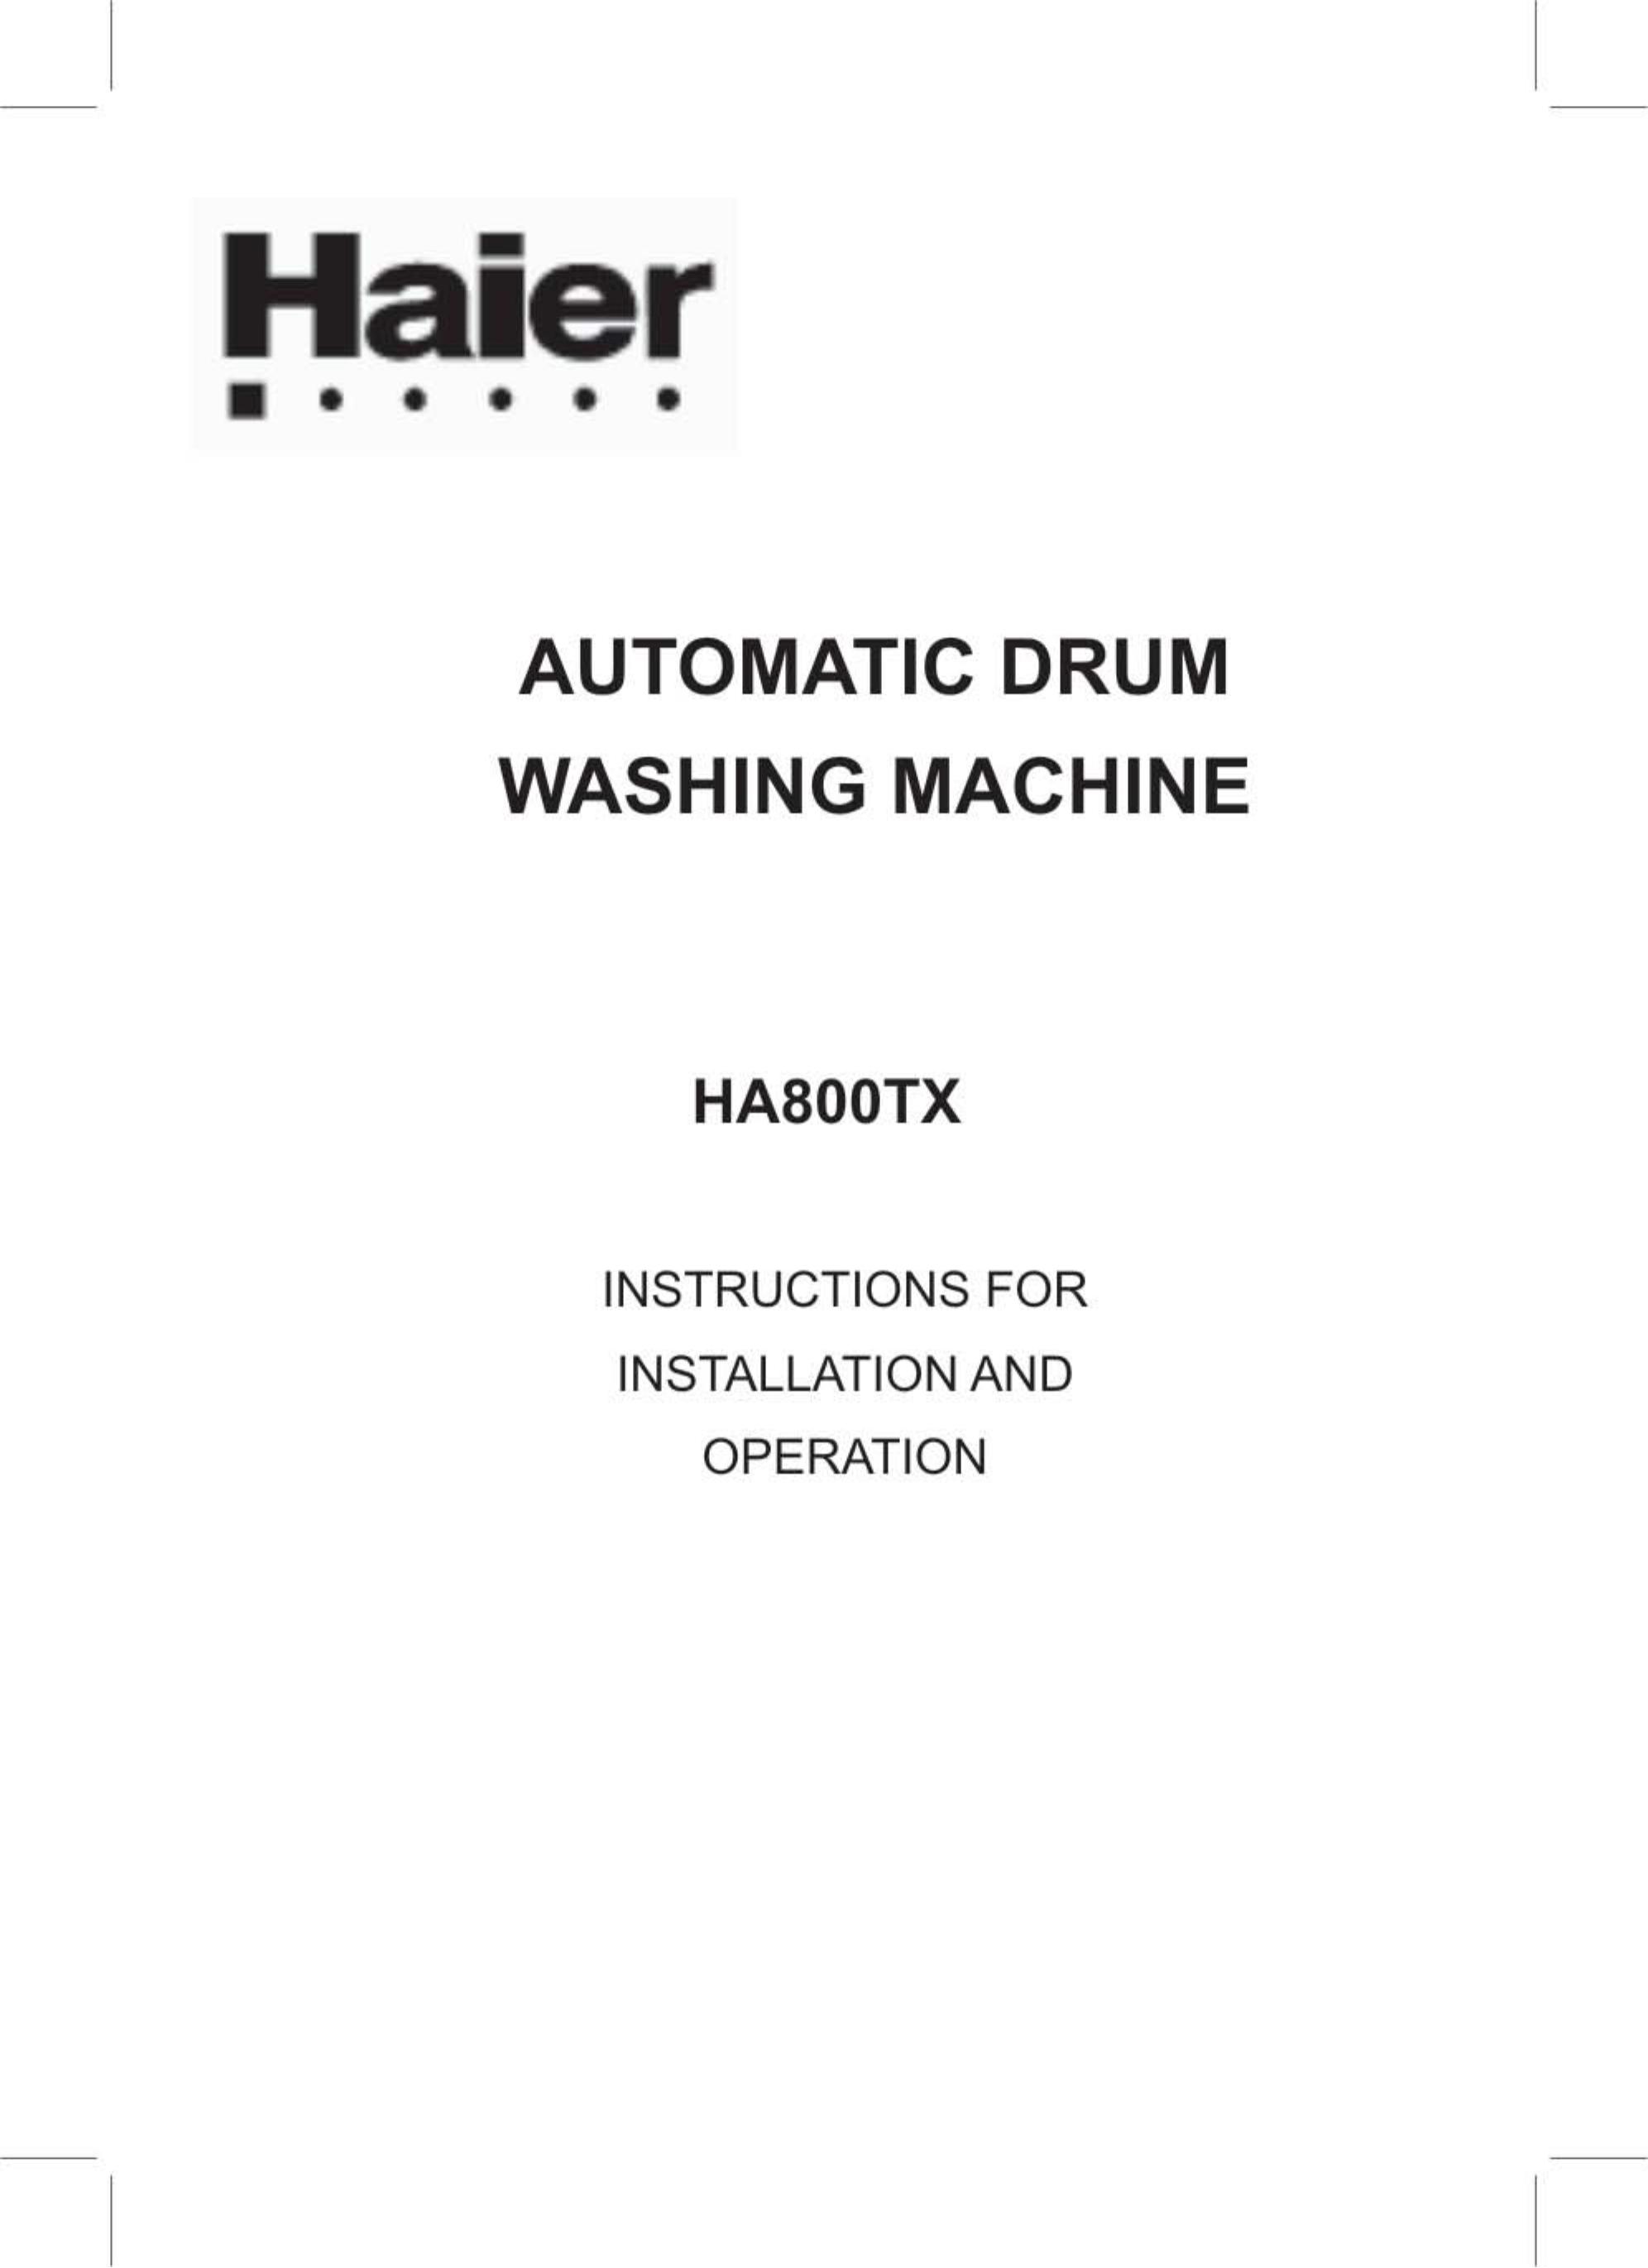 Haier HA800TX Washer User Manual